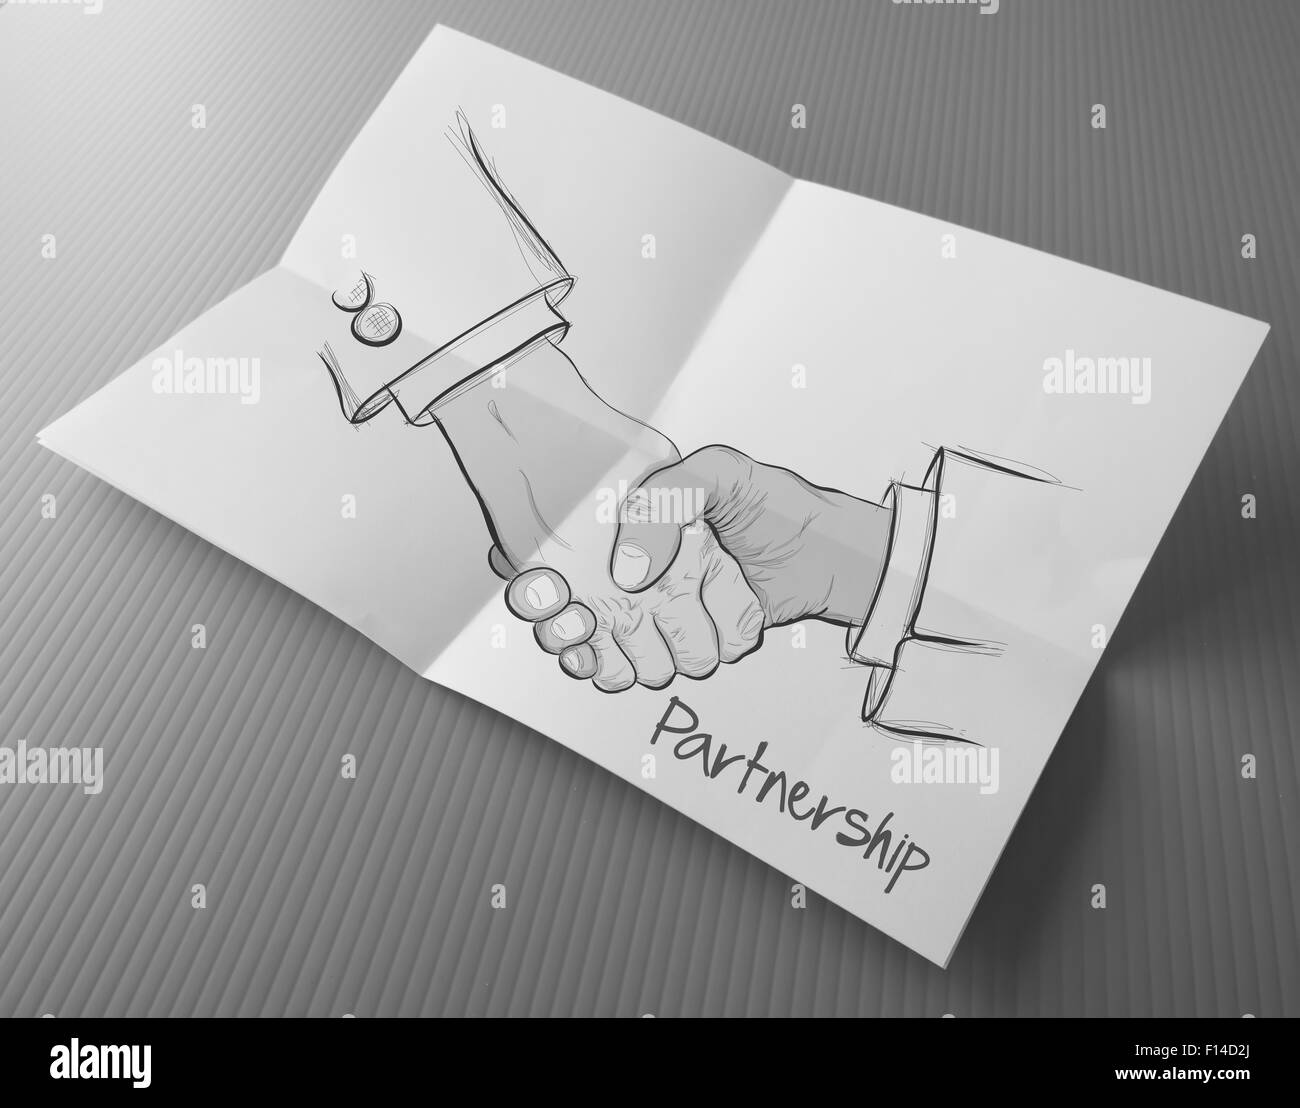 hand drawn handshake sign as partnership business concept Stock Photo